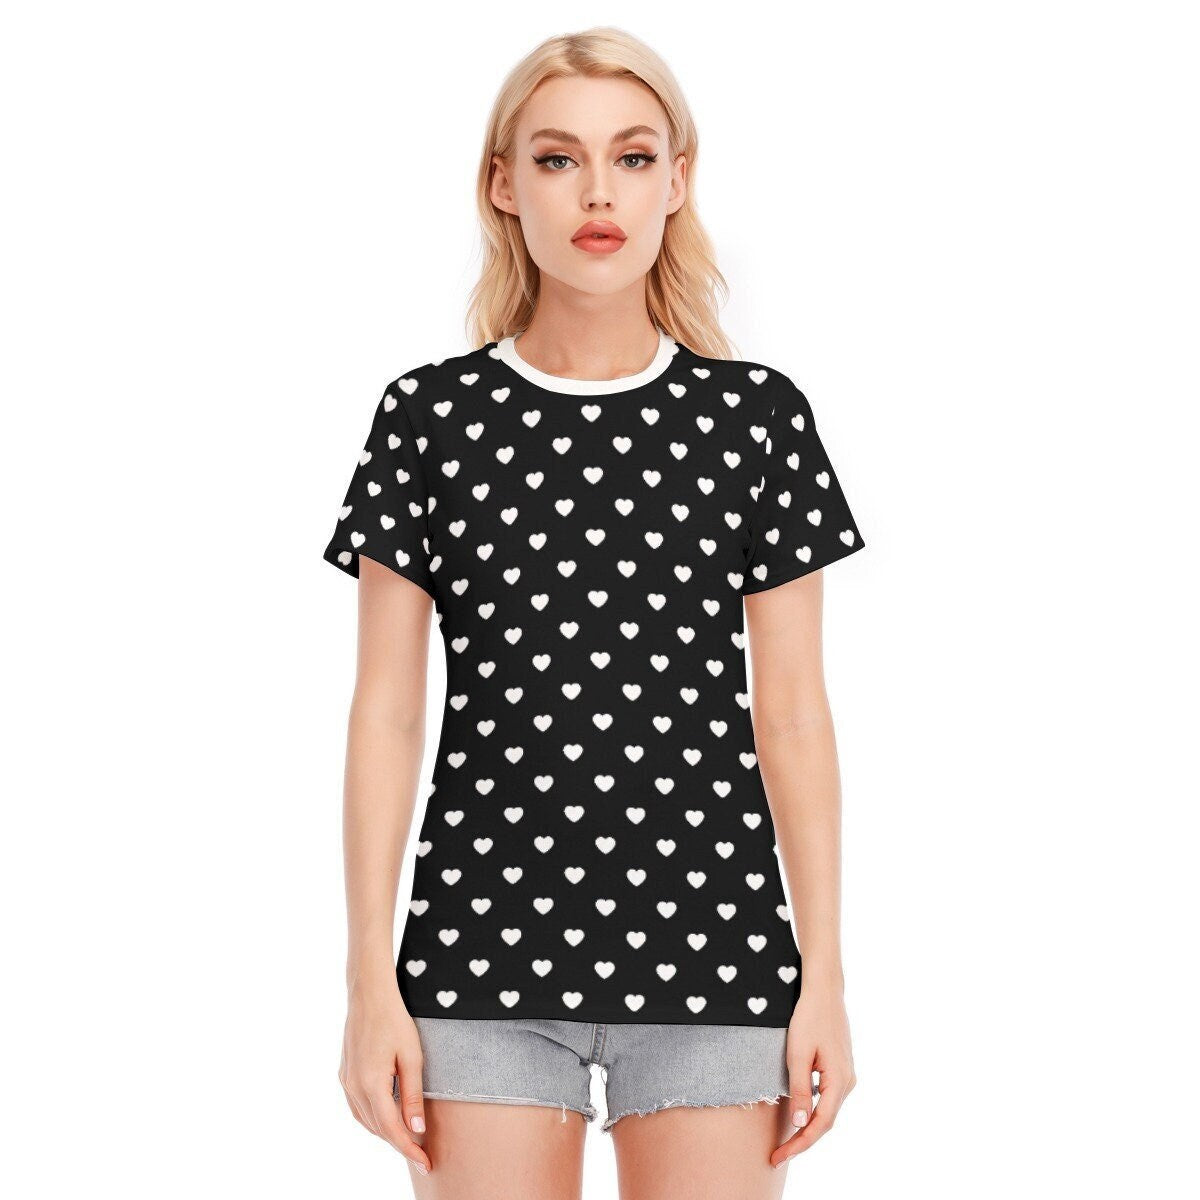 Womens T-shirt, Heart Polka Dot Top,Polka Dot Tshirt, Black Polka Dot Top, Retro T-shirt, Heart Print T-shirt, Heart Pattern T-shirt